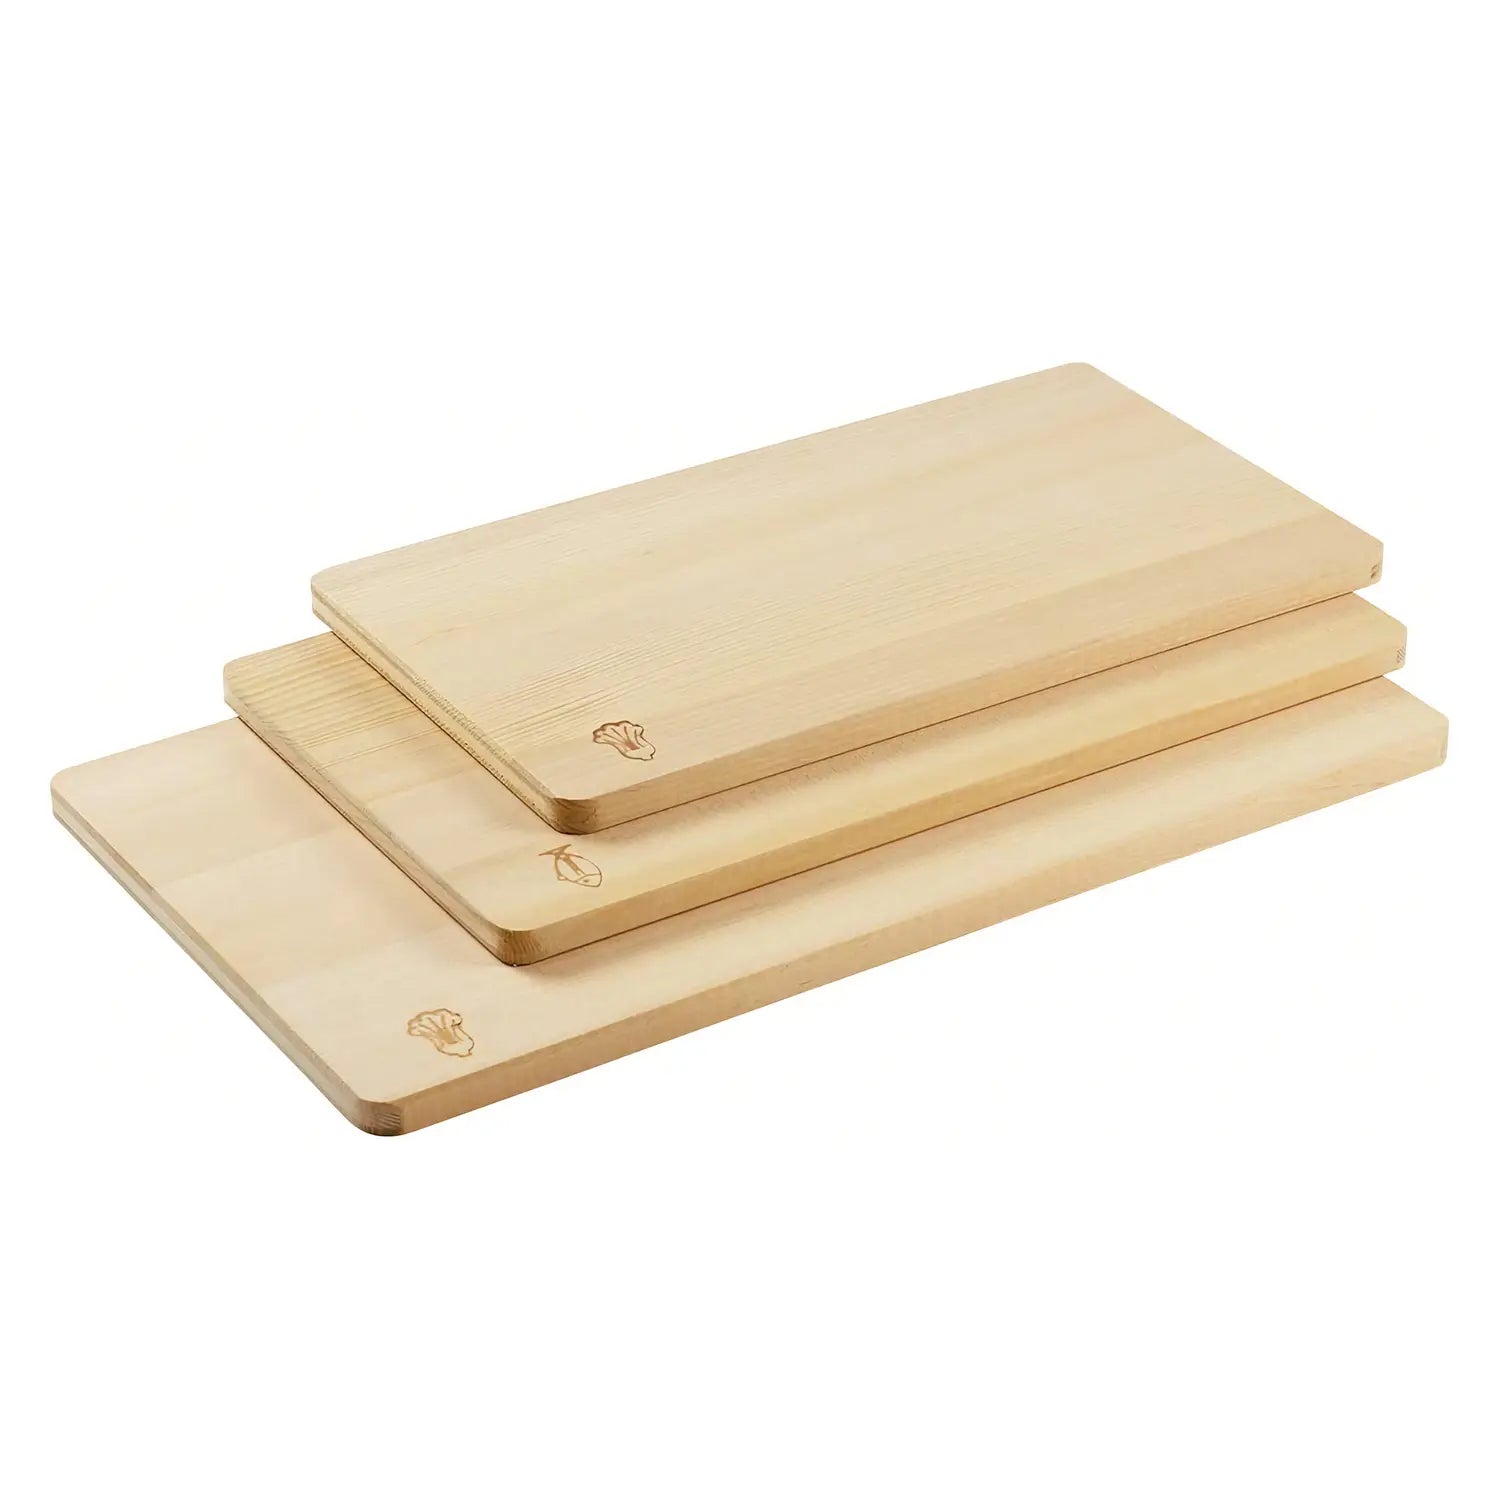 Yamacoh Single Piece Spruce Wooden Cutting Board 05105 